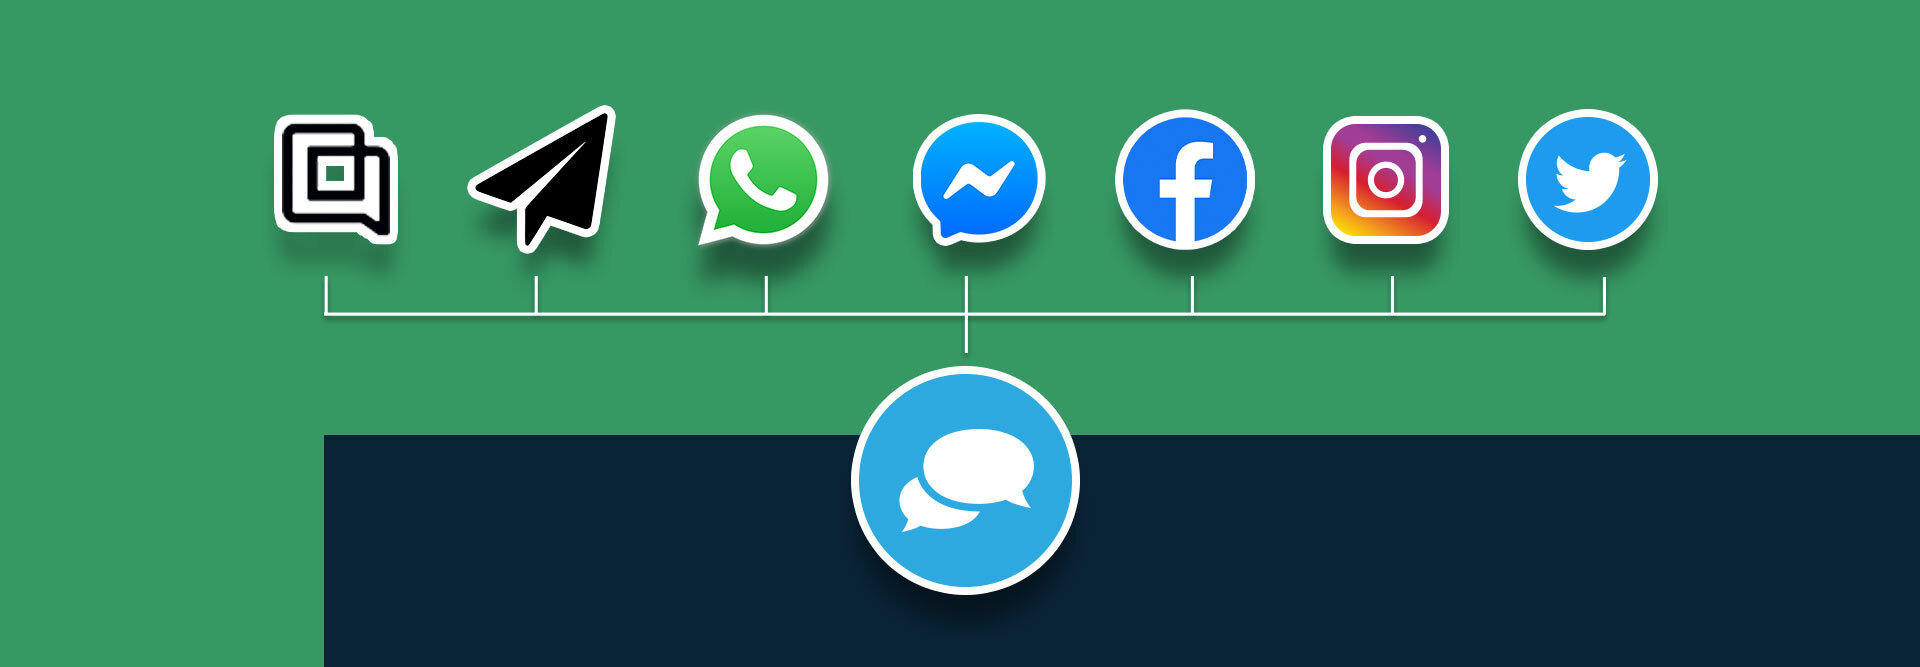 Several social media logos and graphics connected to the Vendasta Social marketing logo to represent social media integration